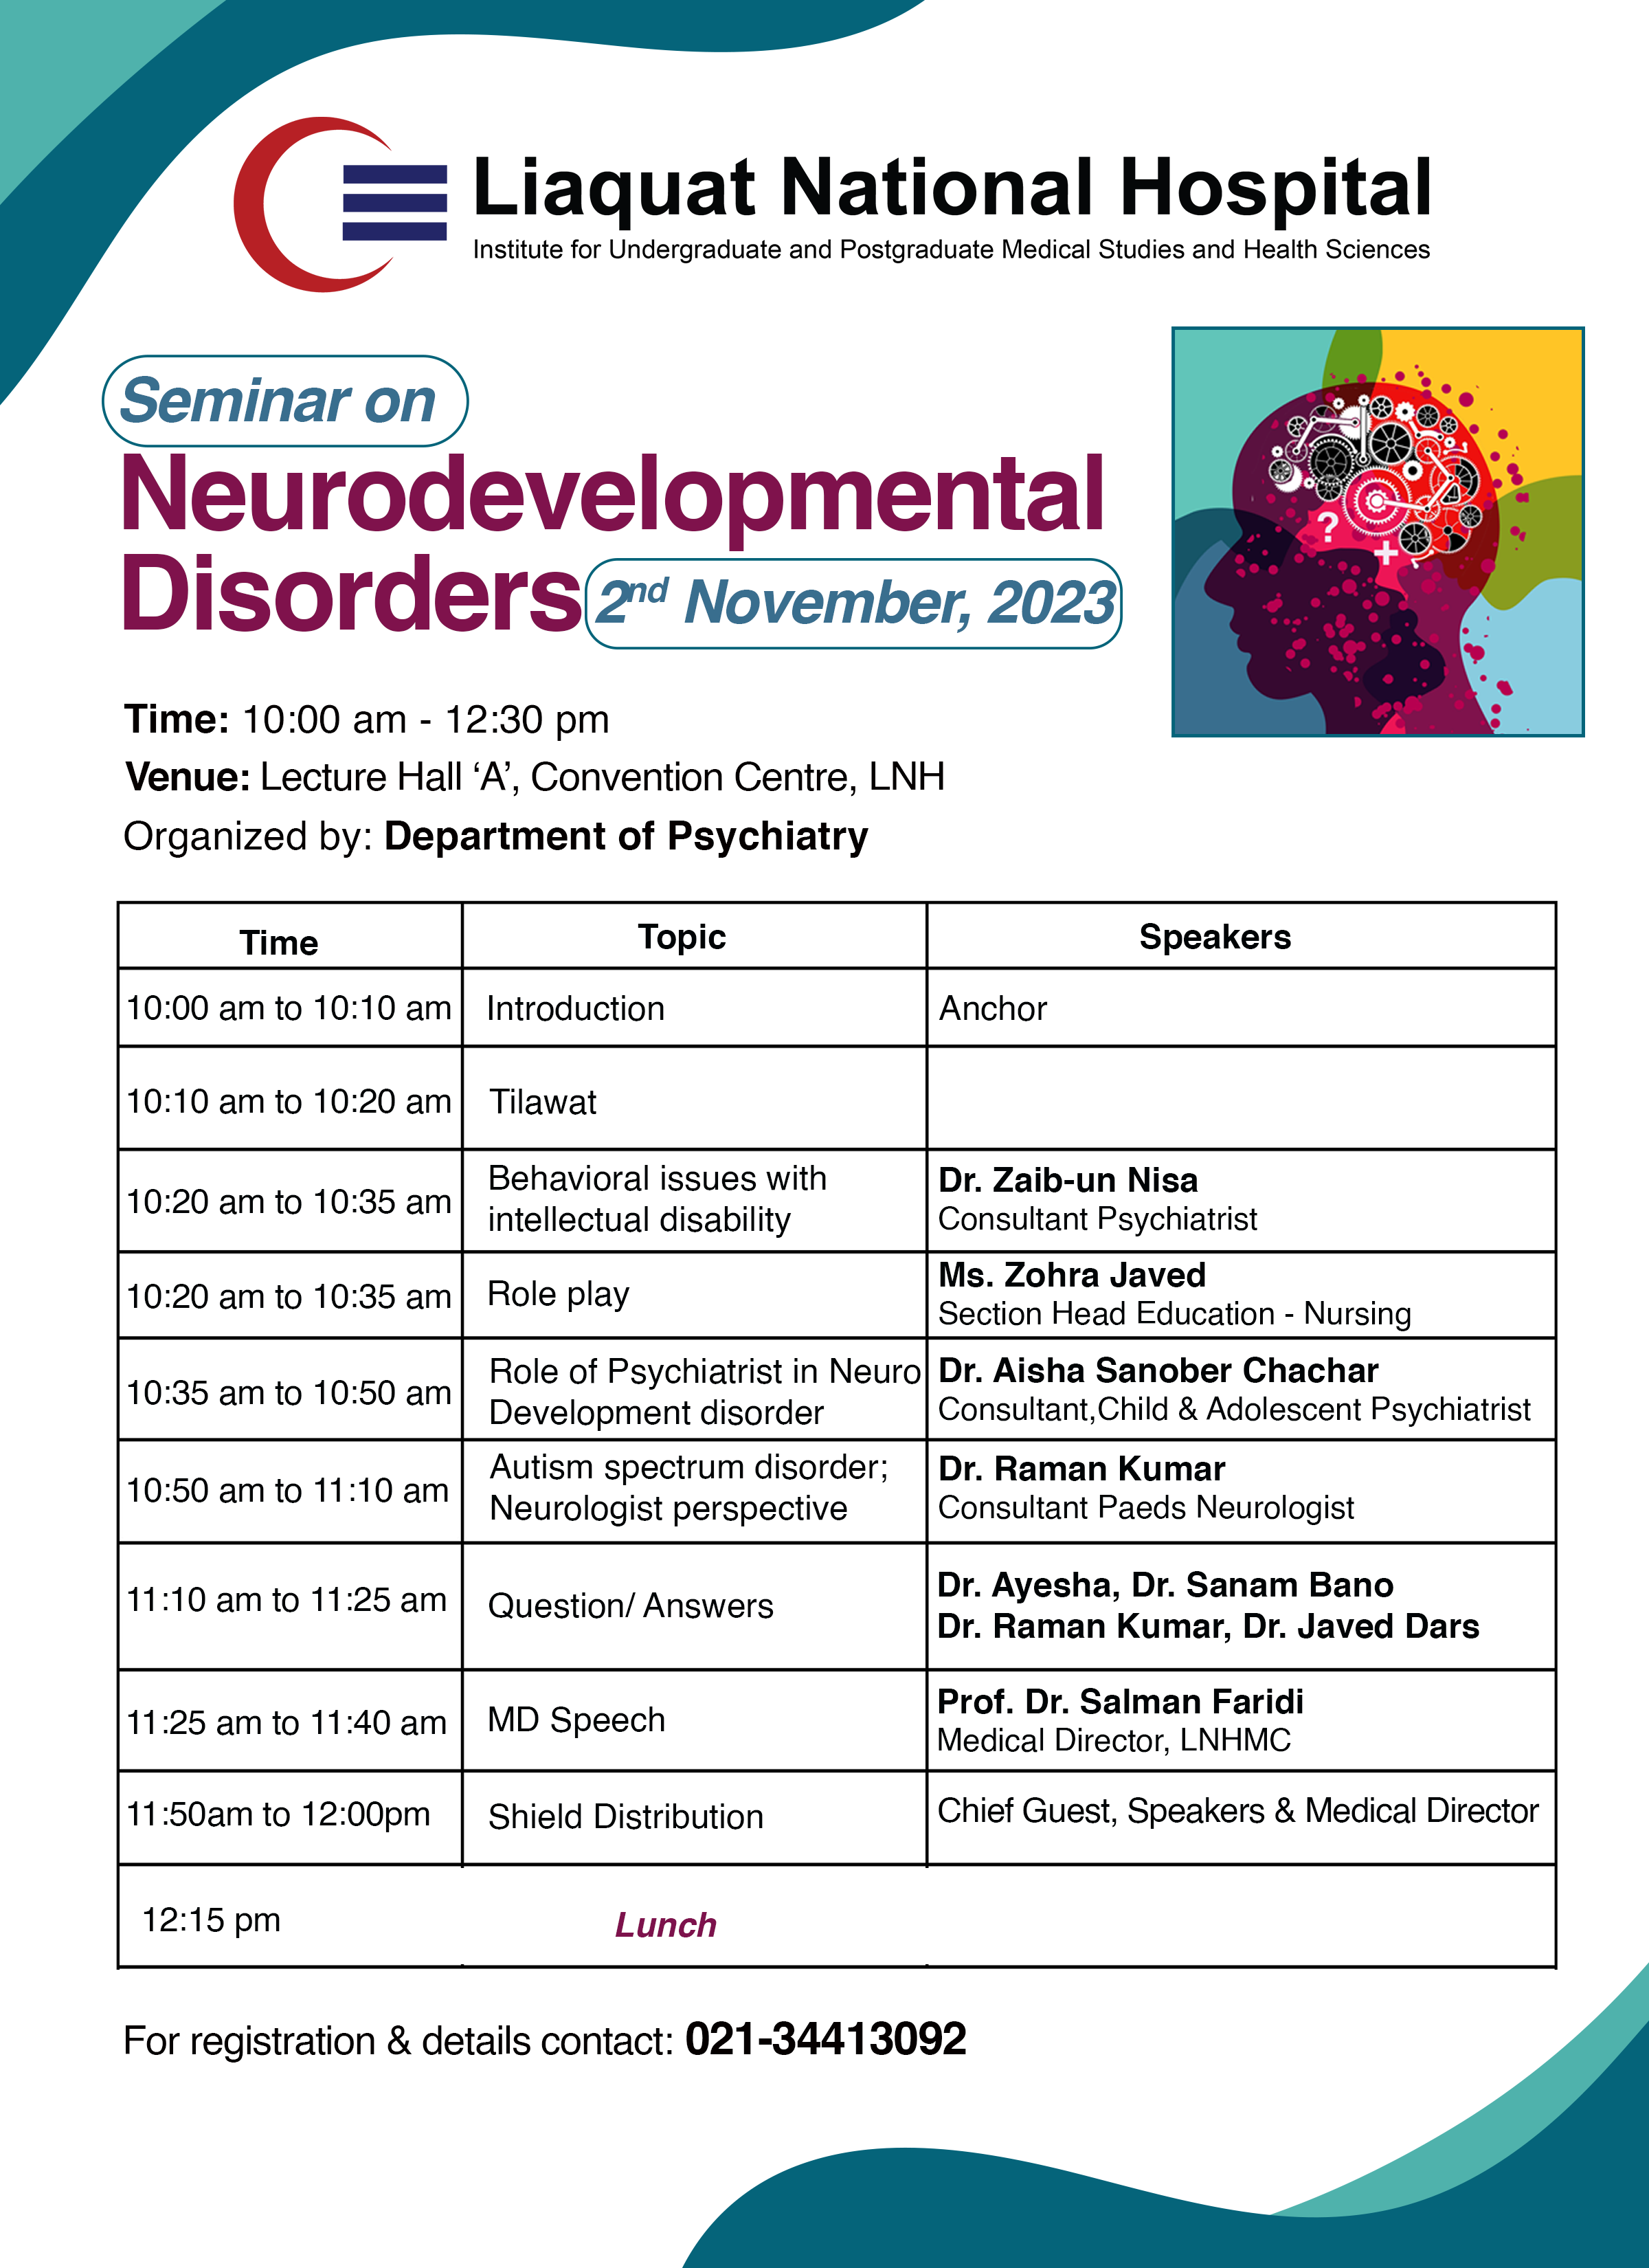 Seminar on Neurodevelopmental Disorders